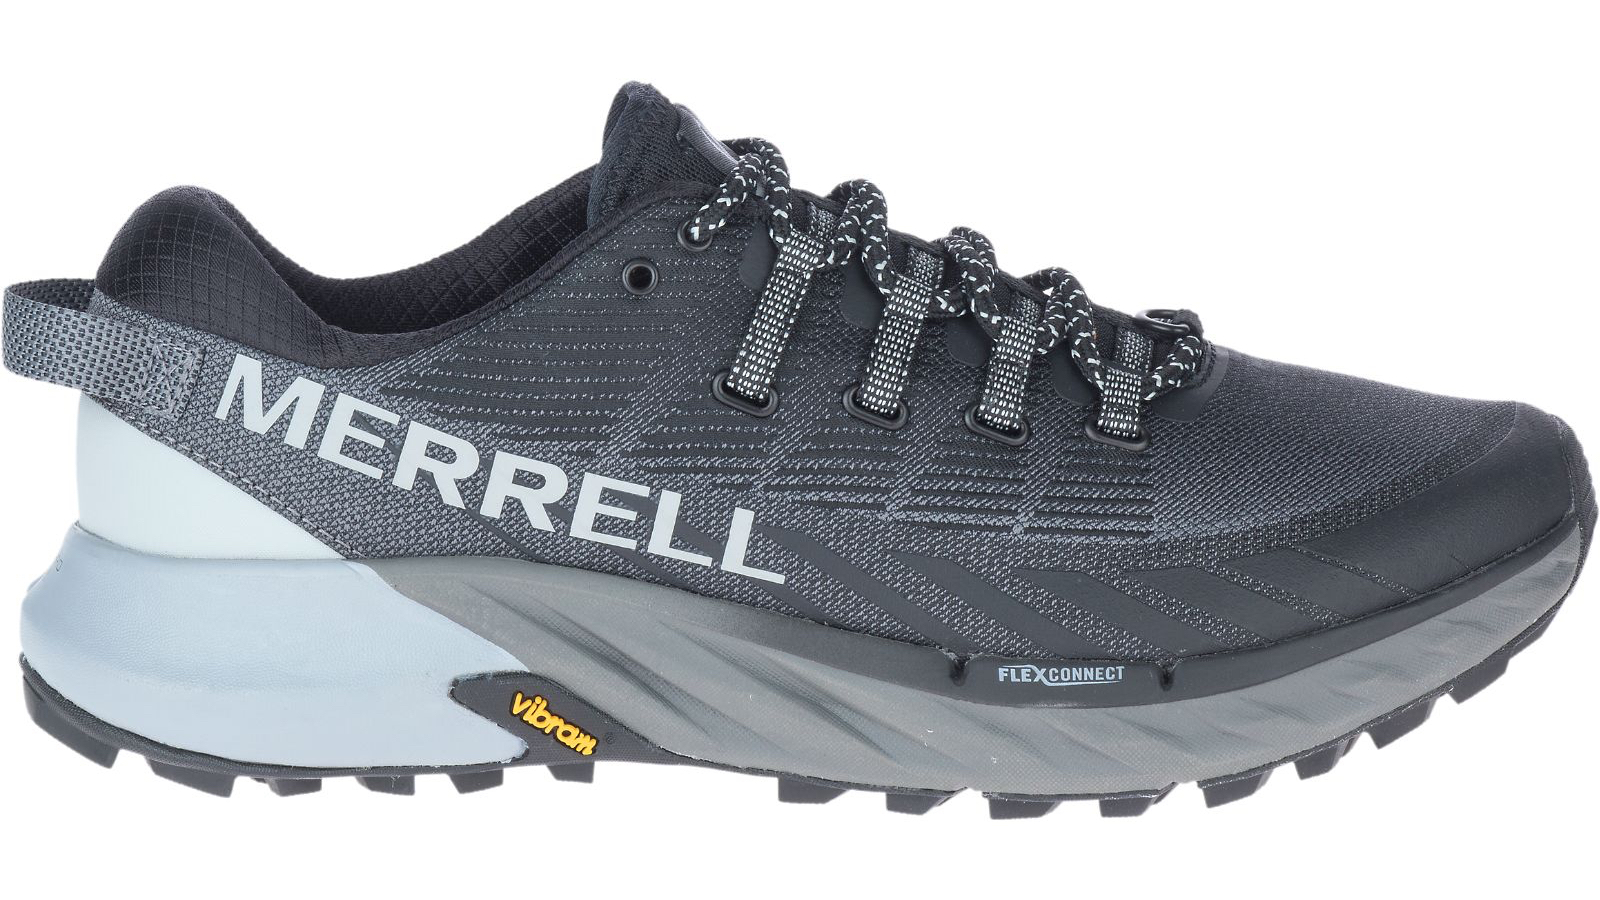 Merrell Agility trail shoe | Advnture